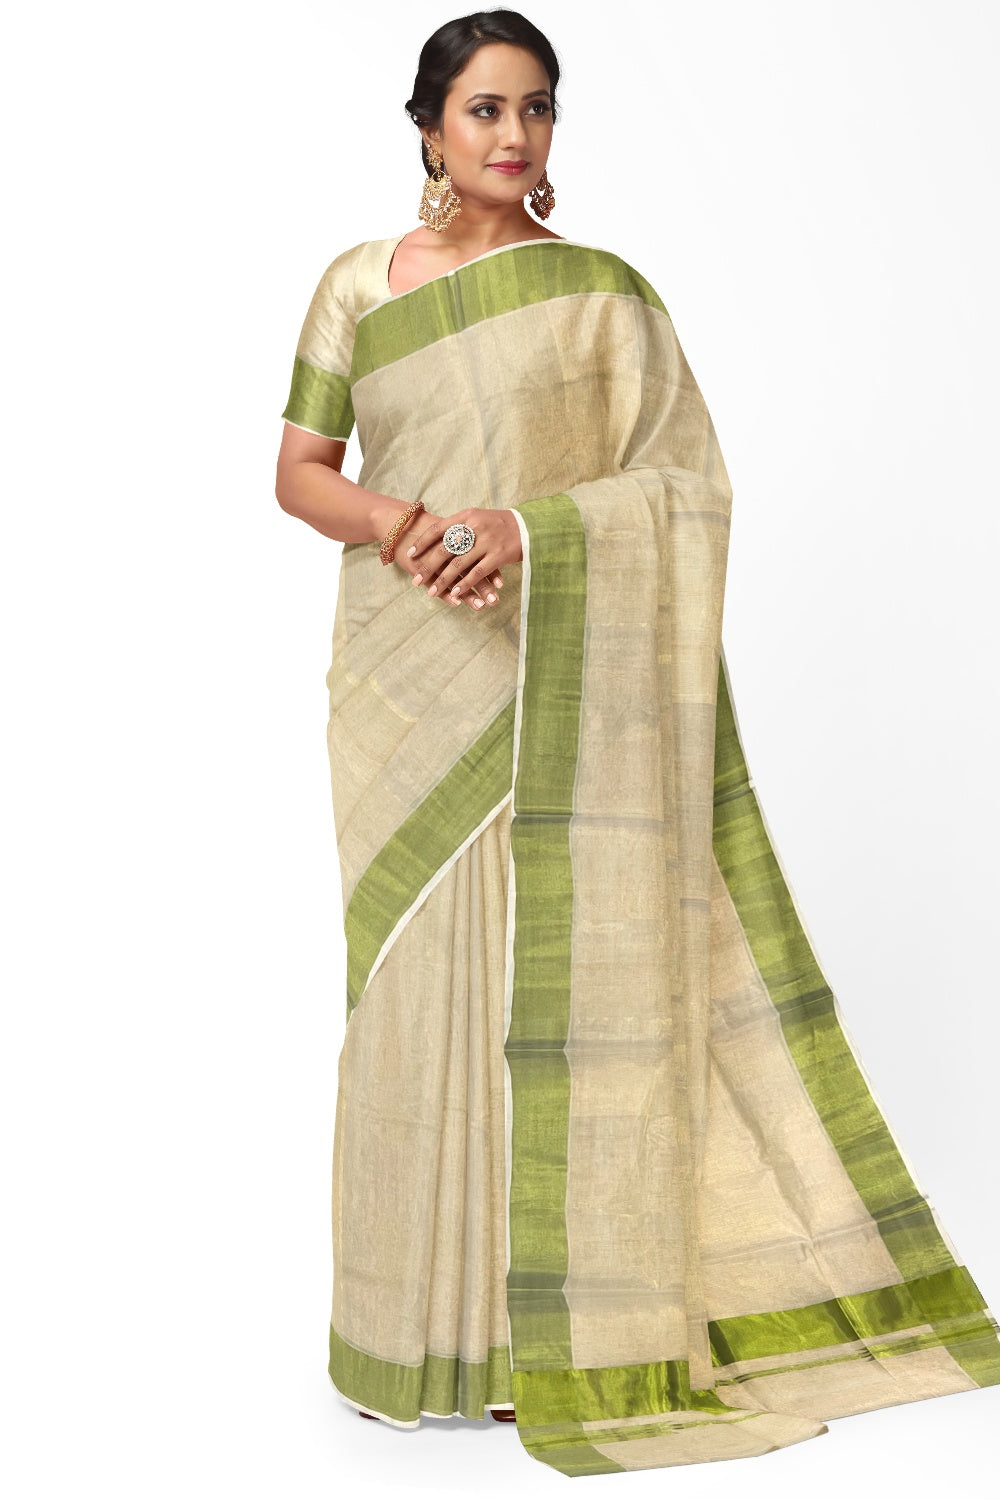 Southloom Exclusive Premium Handloom Tissue Saree with Light Green Kasavu Borders and Kara